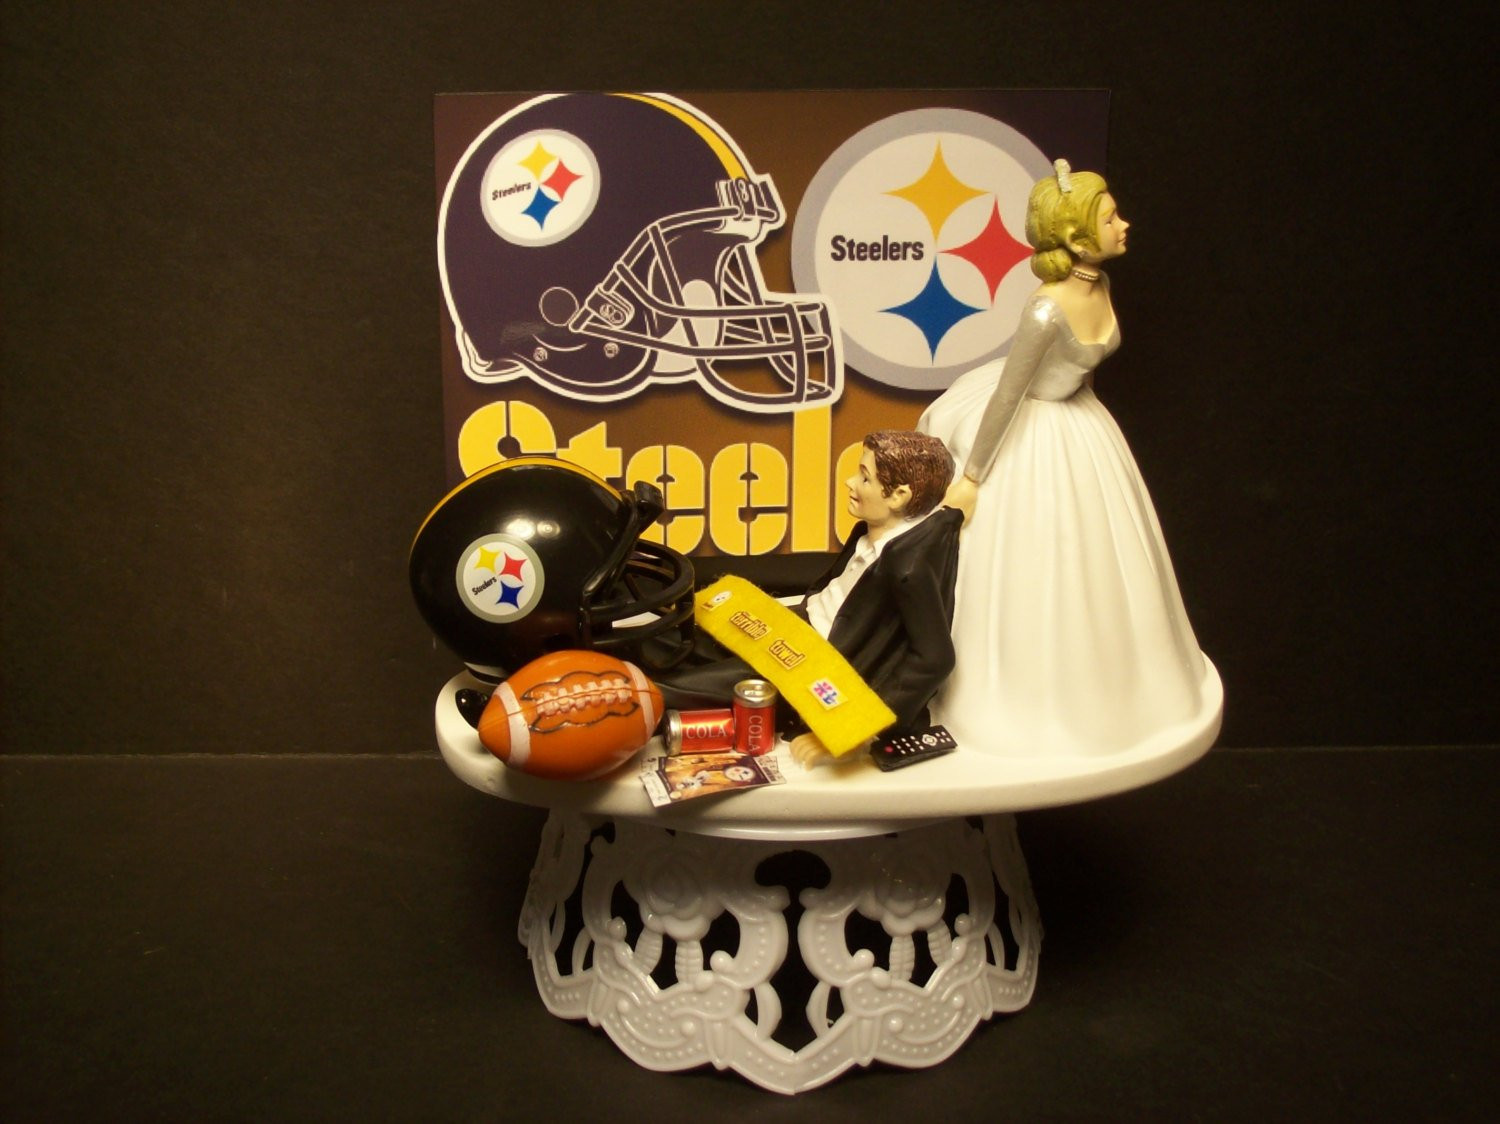 Steelers Wedding Cakes
 FOOTBALL STEELERS or your team Bride and Groom Funny Wedding